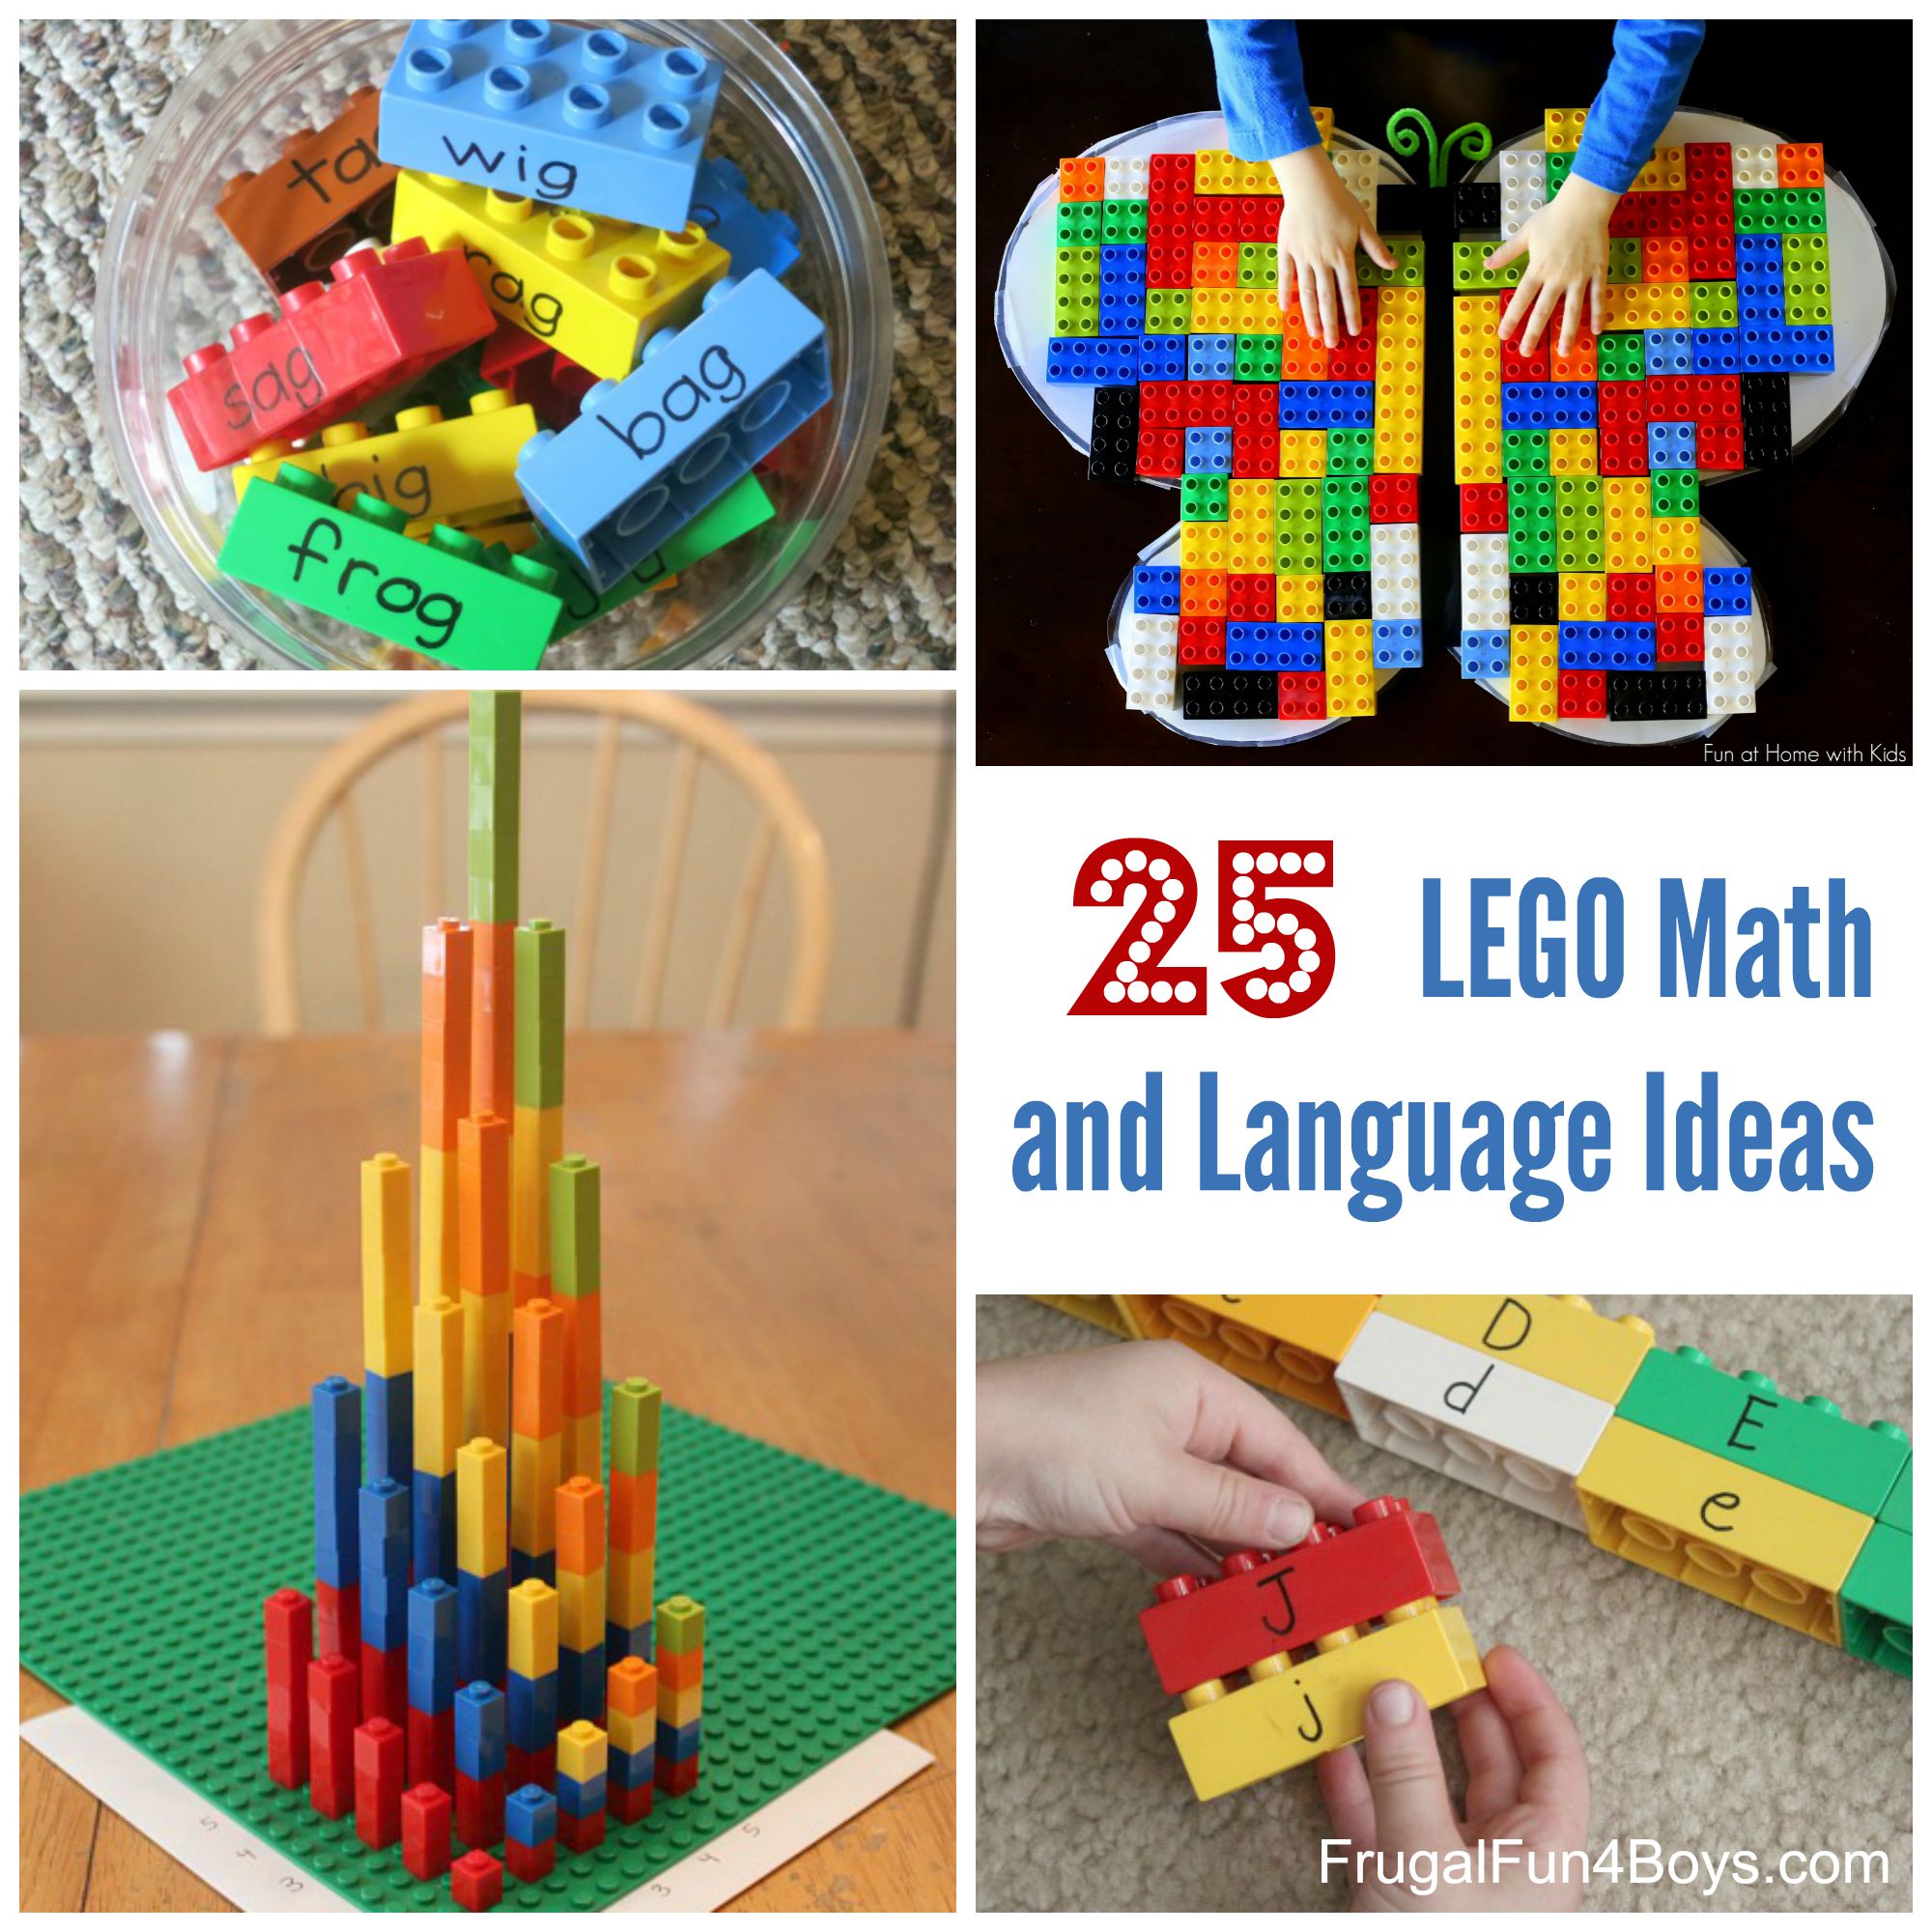 25+ LEGO Math and Language Learning Ideas